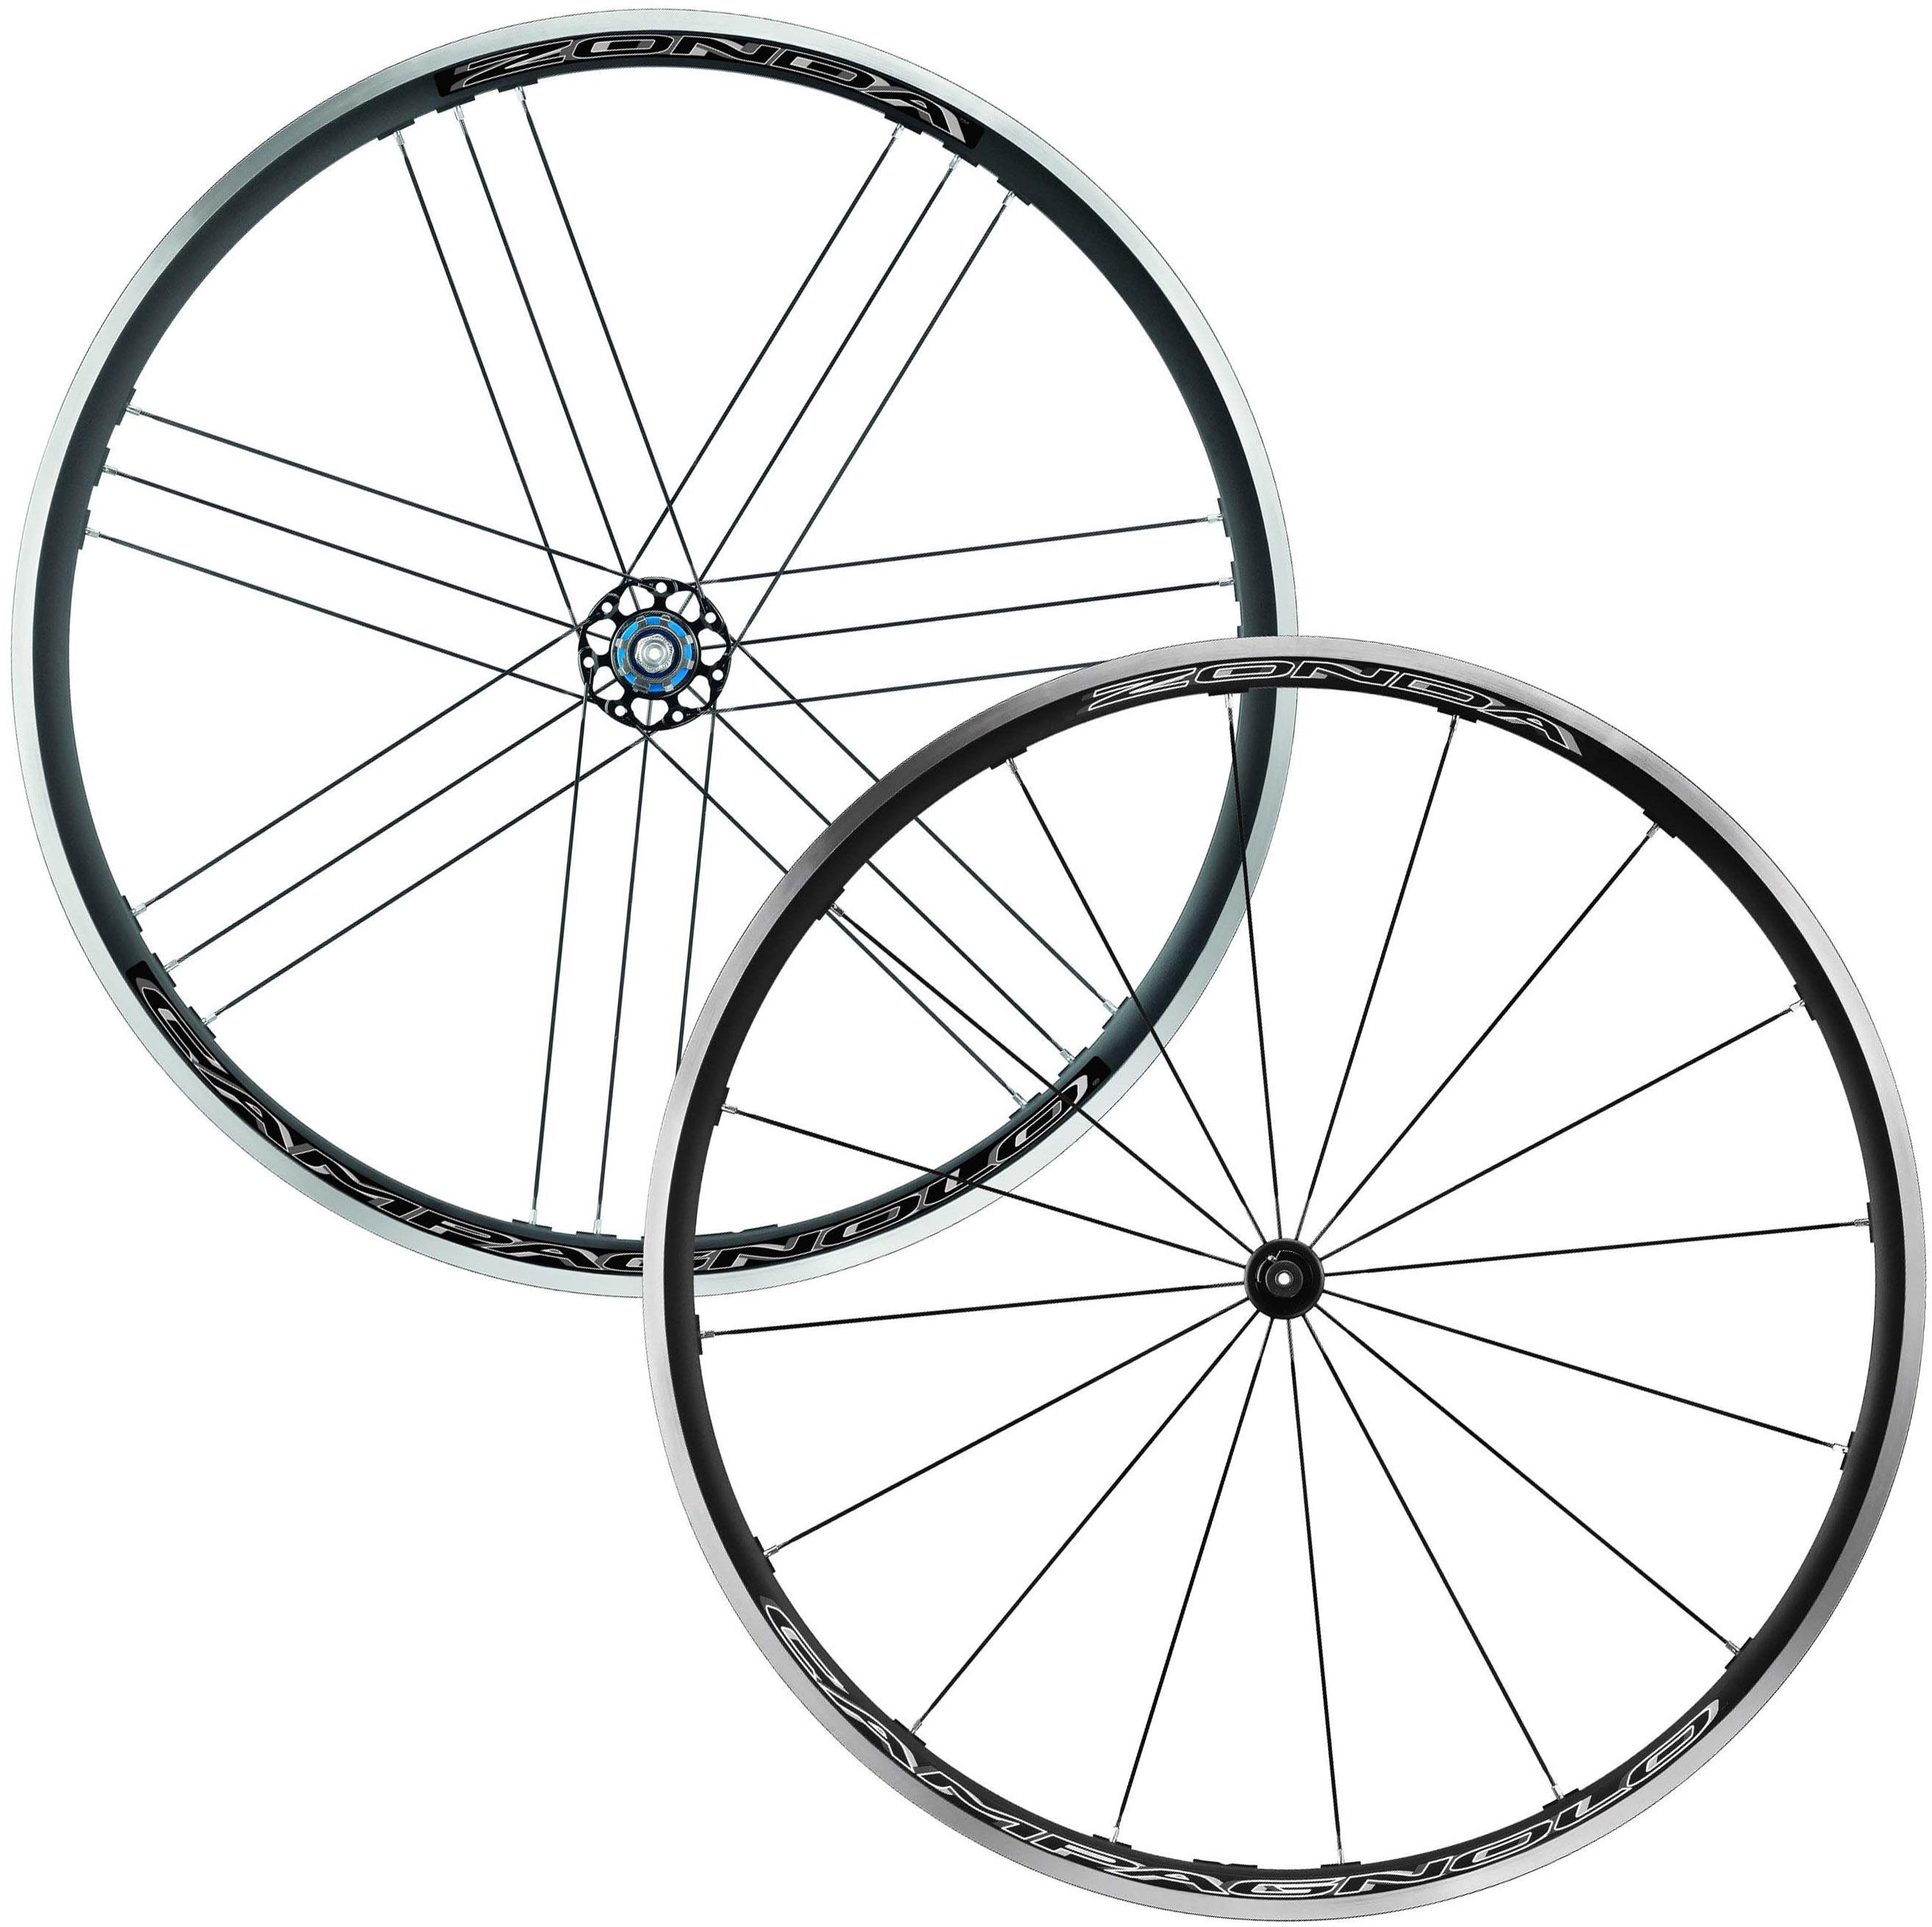 Campagnolo Zonda C17 Road Clincher Wheelset | cycling wheel